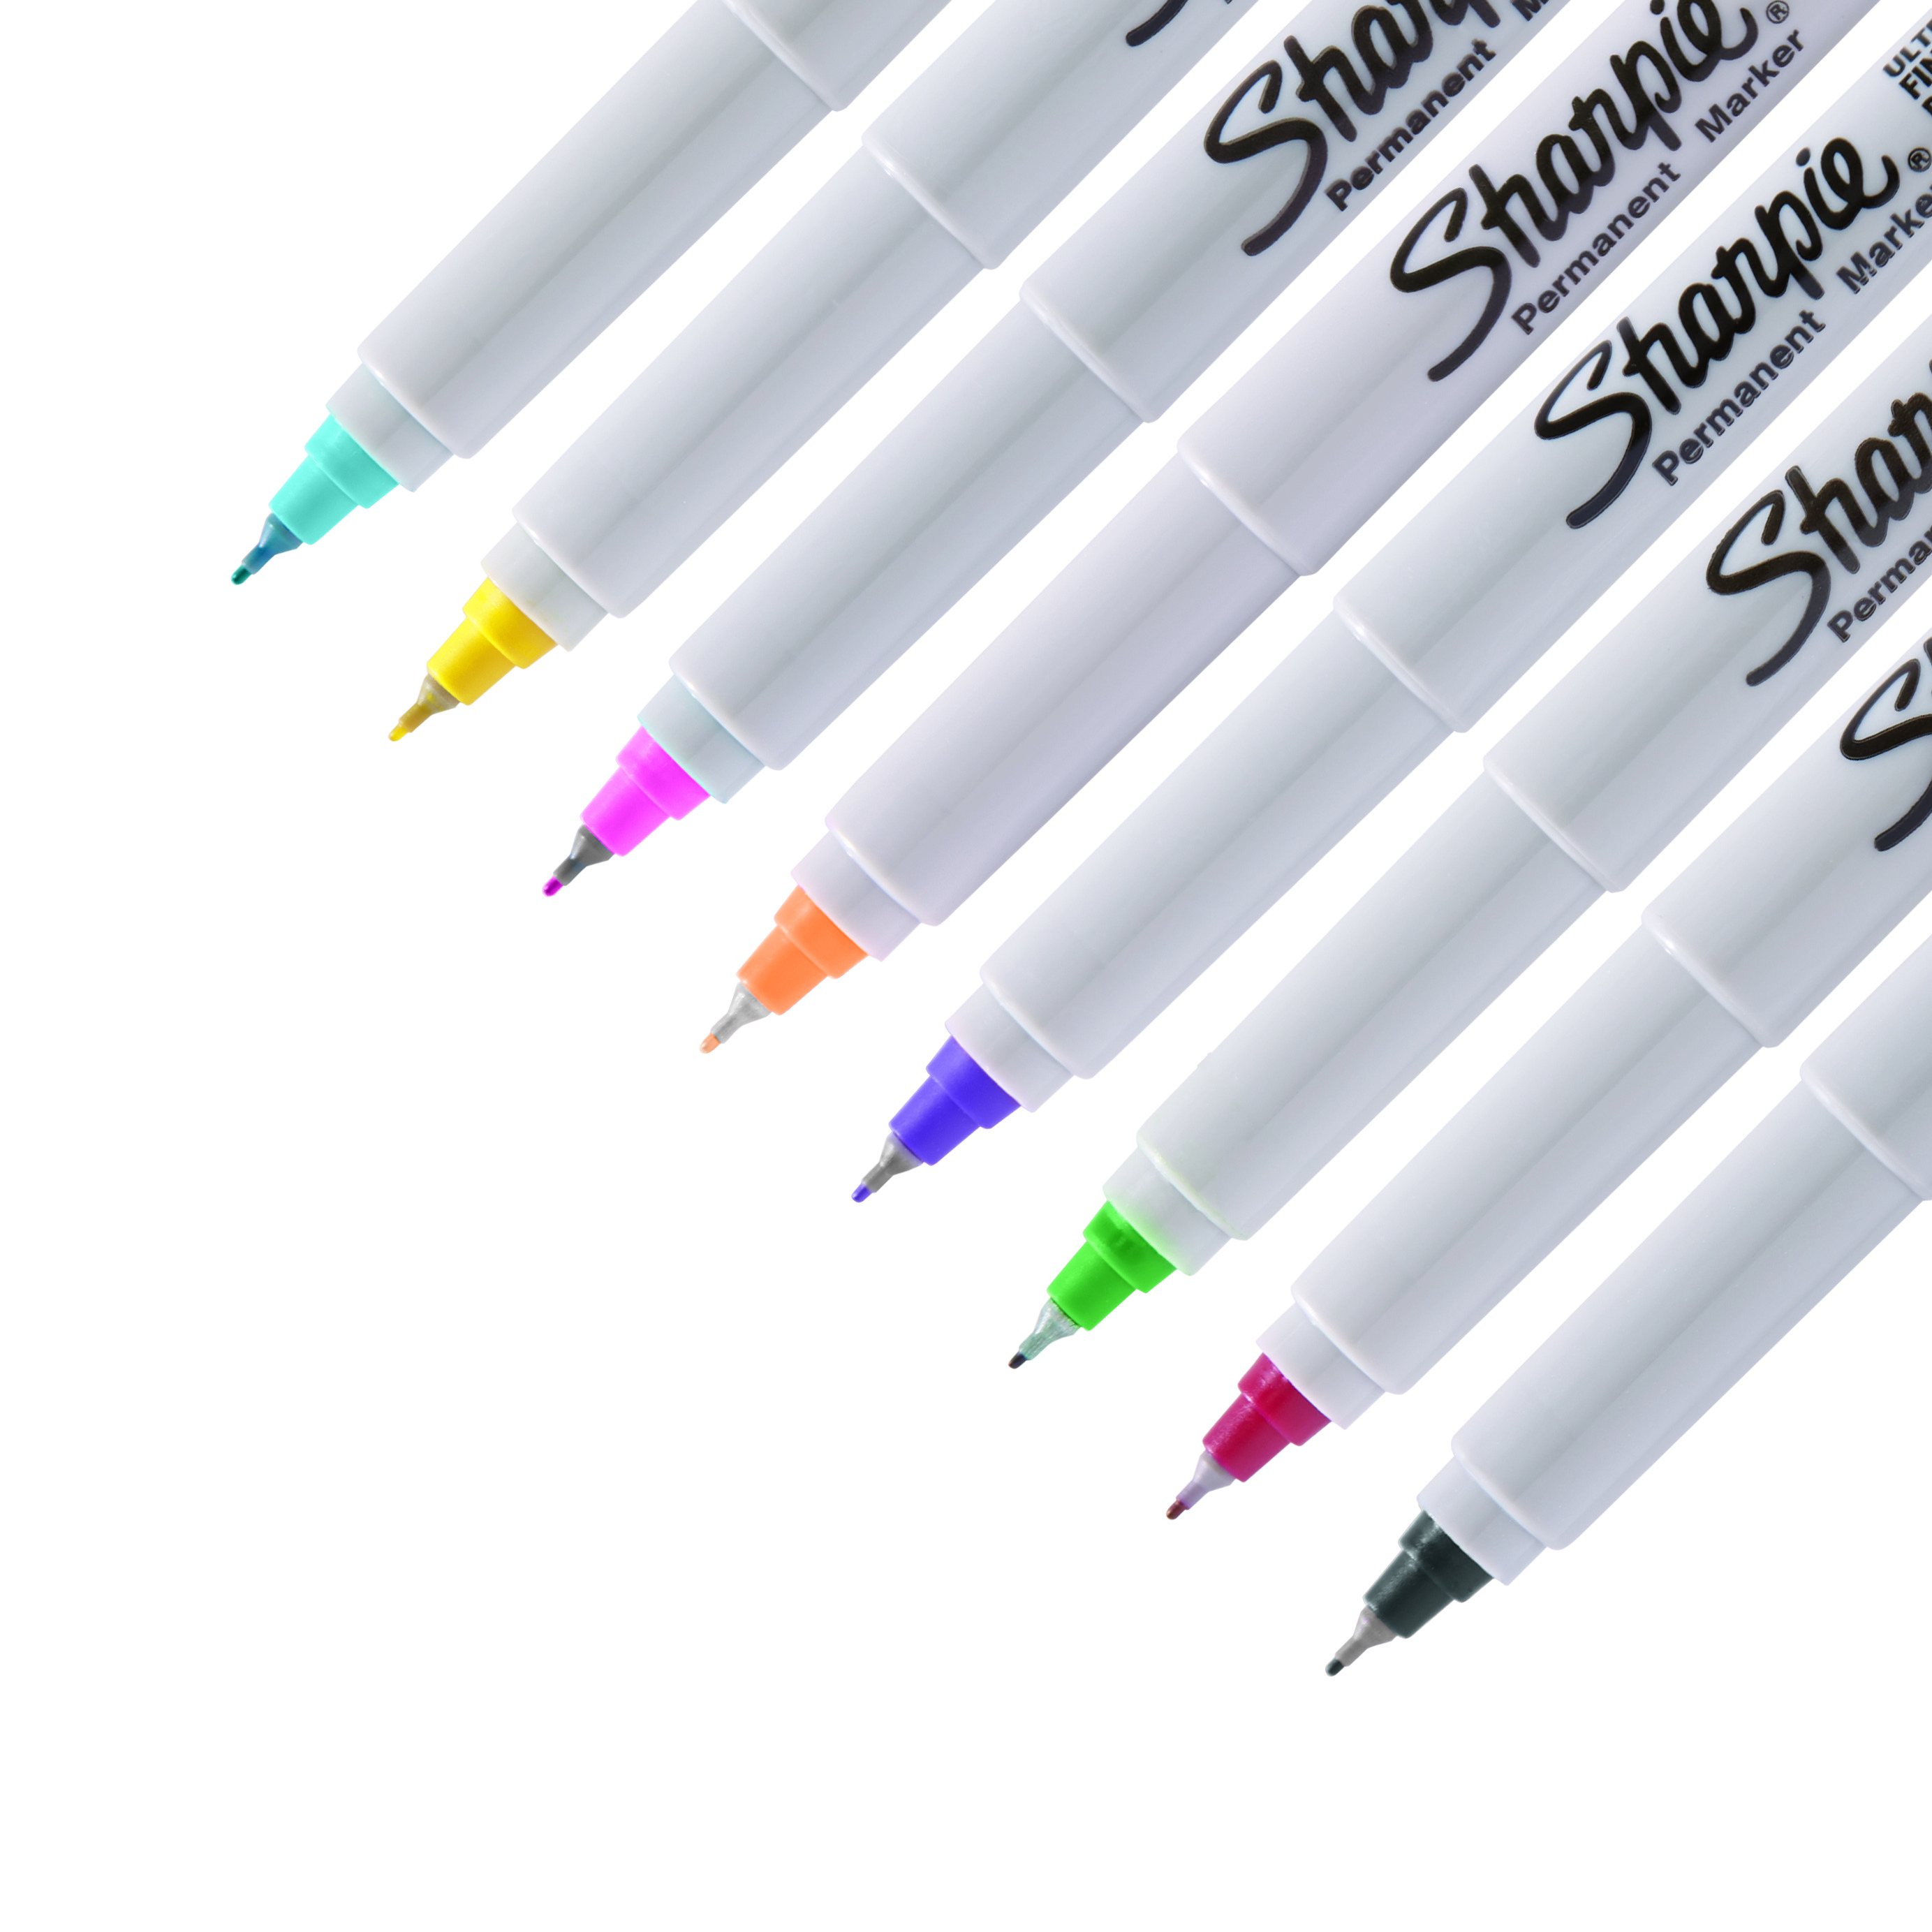 Sharpie Permanent Marker Limited Edition Set, Exclusive Color Assortment, plus 6 Bonus Coloring Sheets, 36 Count - image 7 of 9